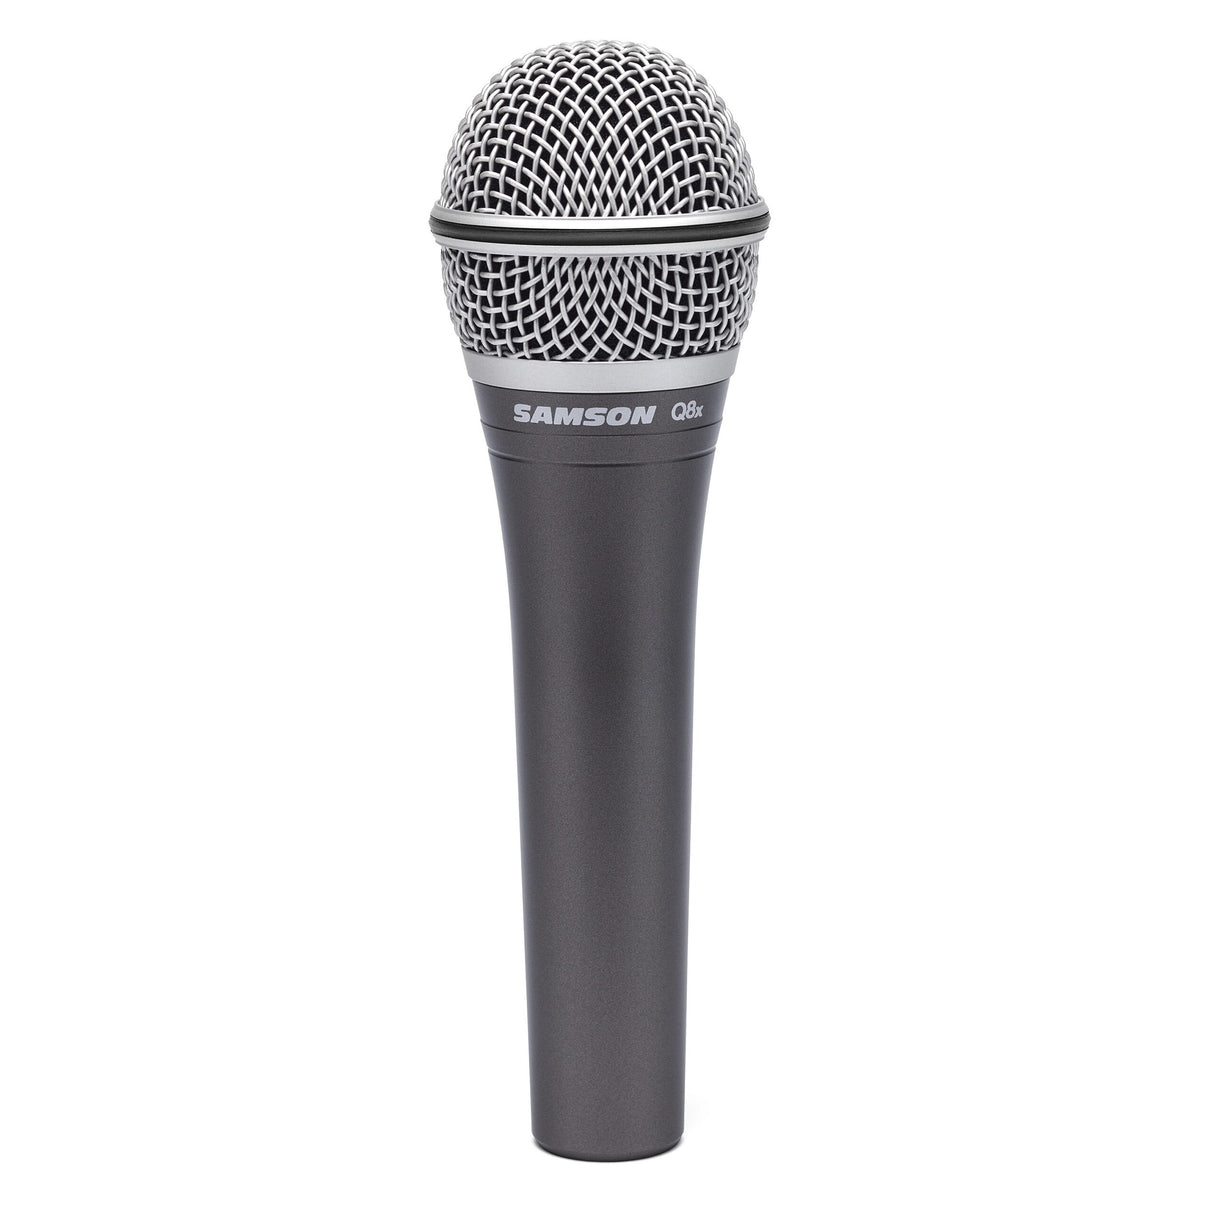 Samson Q8X Dynamic Supercardioid Handheld Microphone